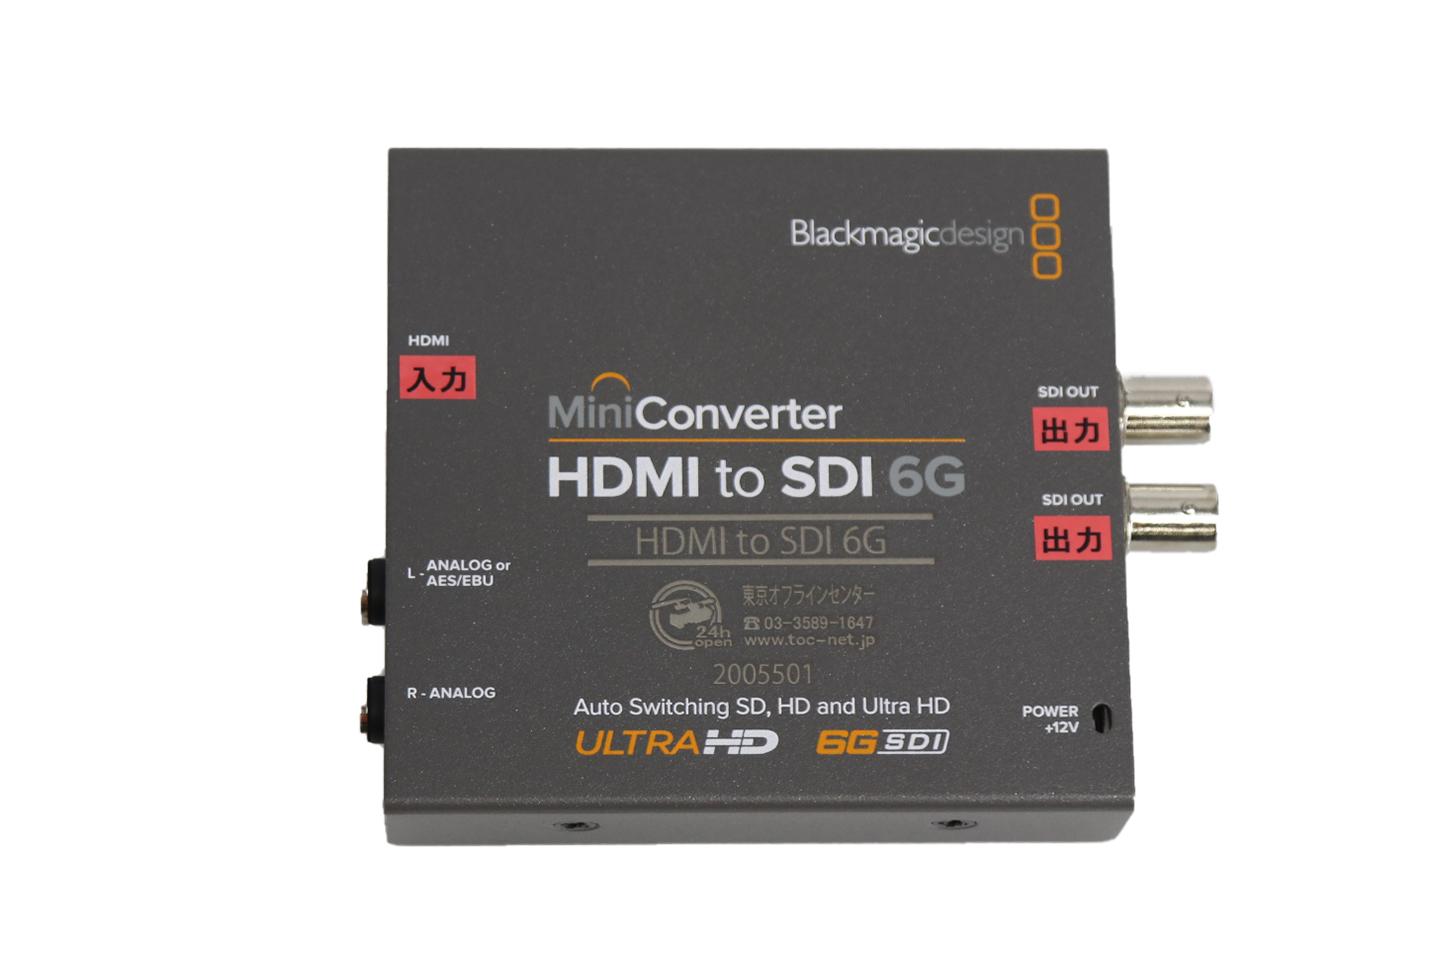 Blackmagic Design HDMI to SDI 6G(miniConverter)